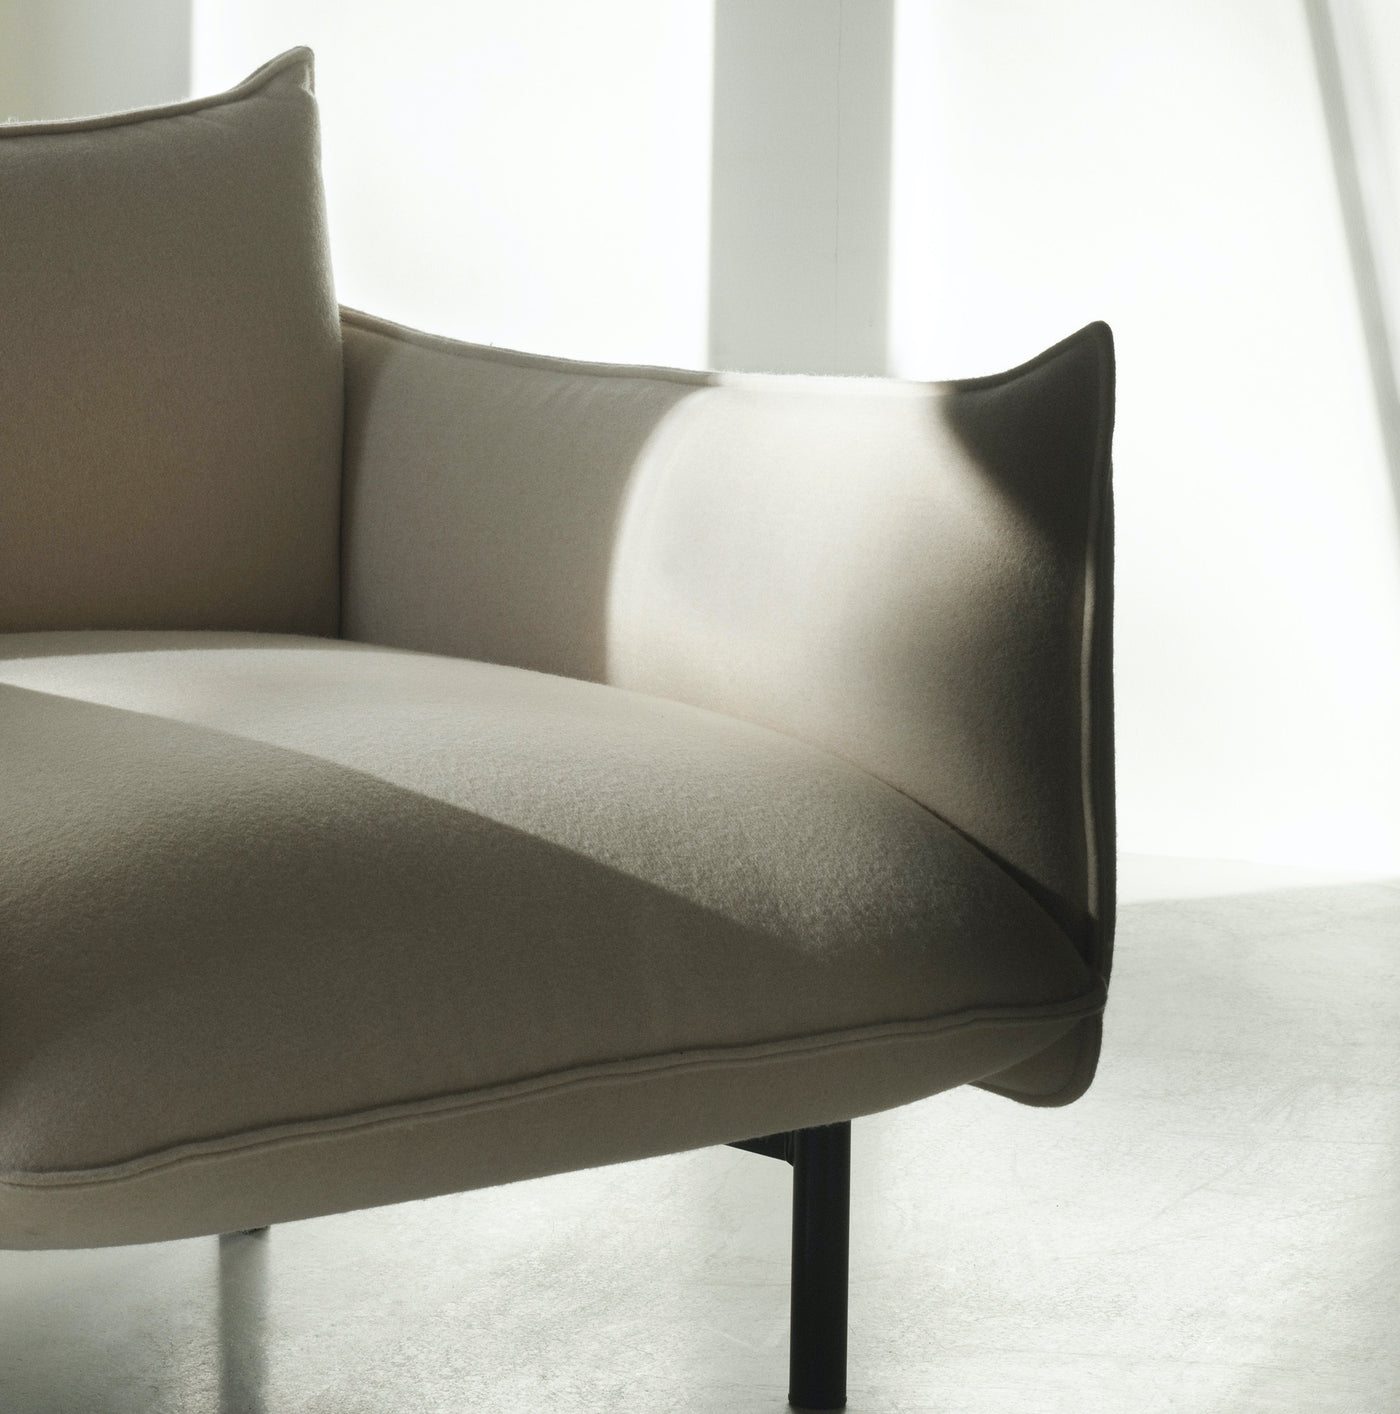 Normann Copenhagen Ark 3 Seater Modular Sofa at someday designs. #colour_divina-md-203